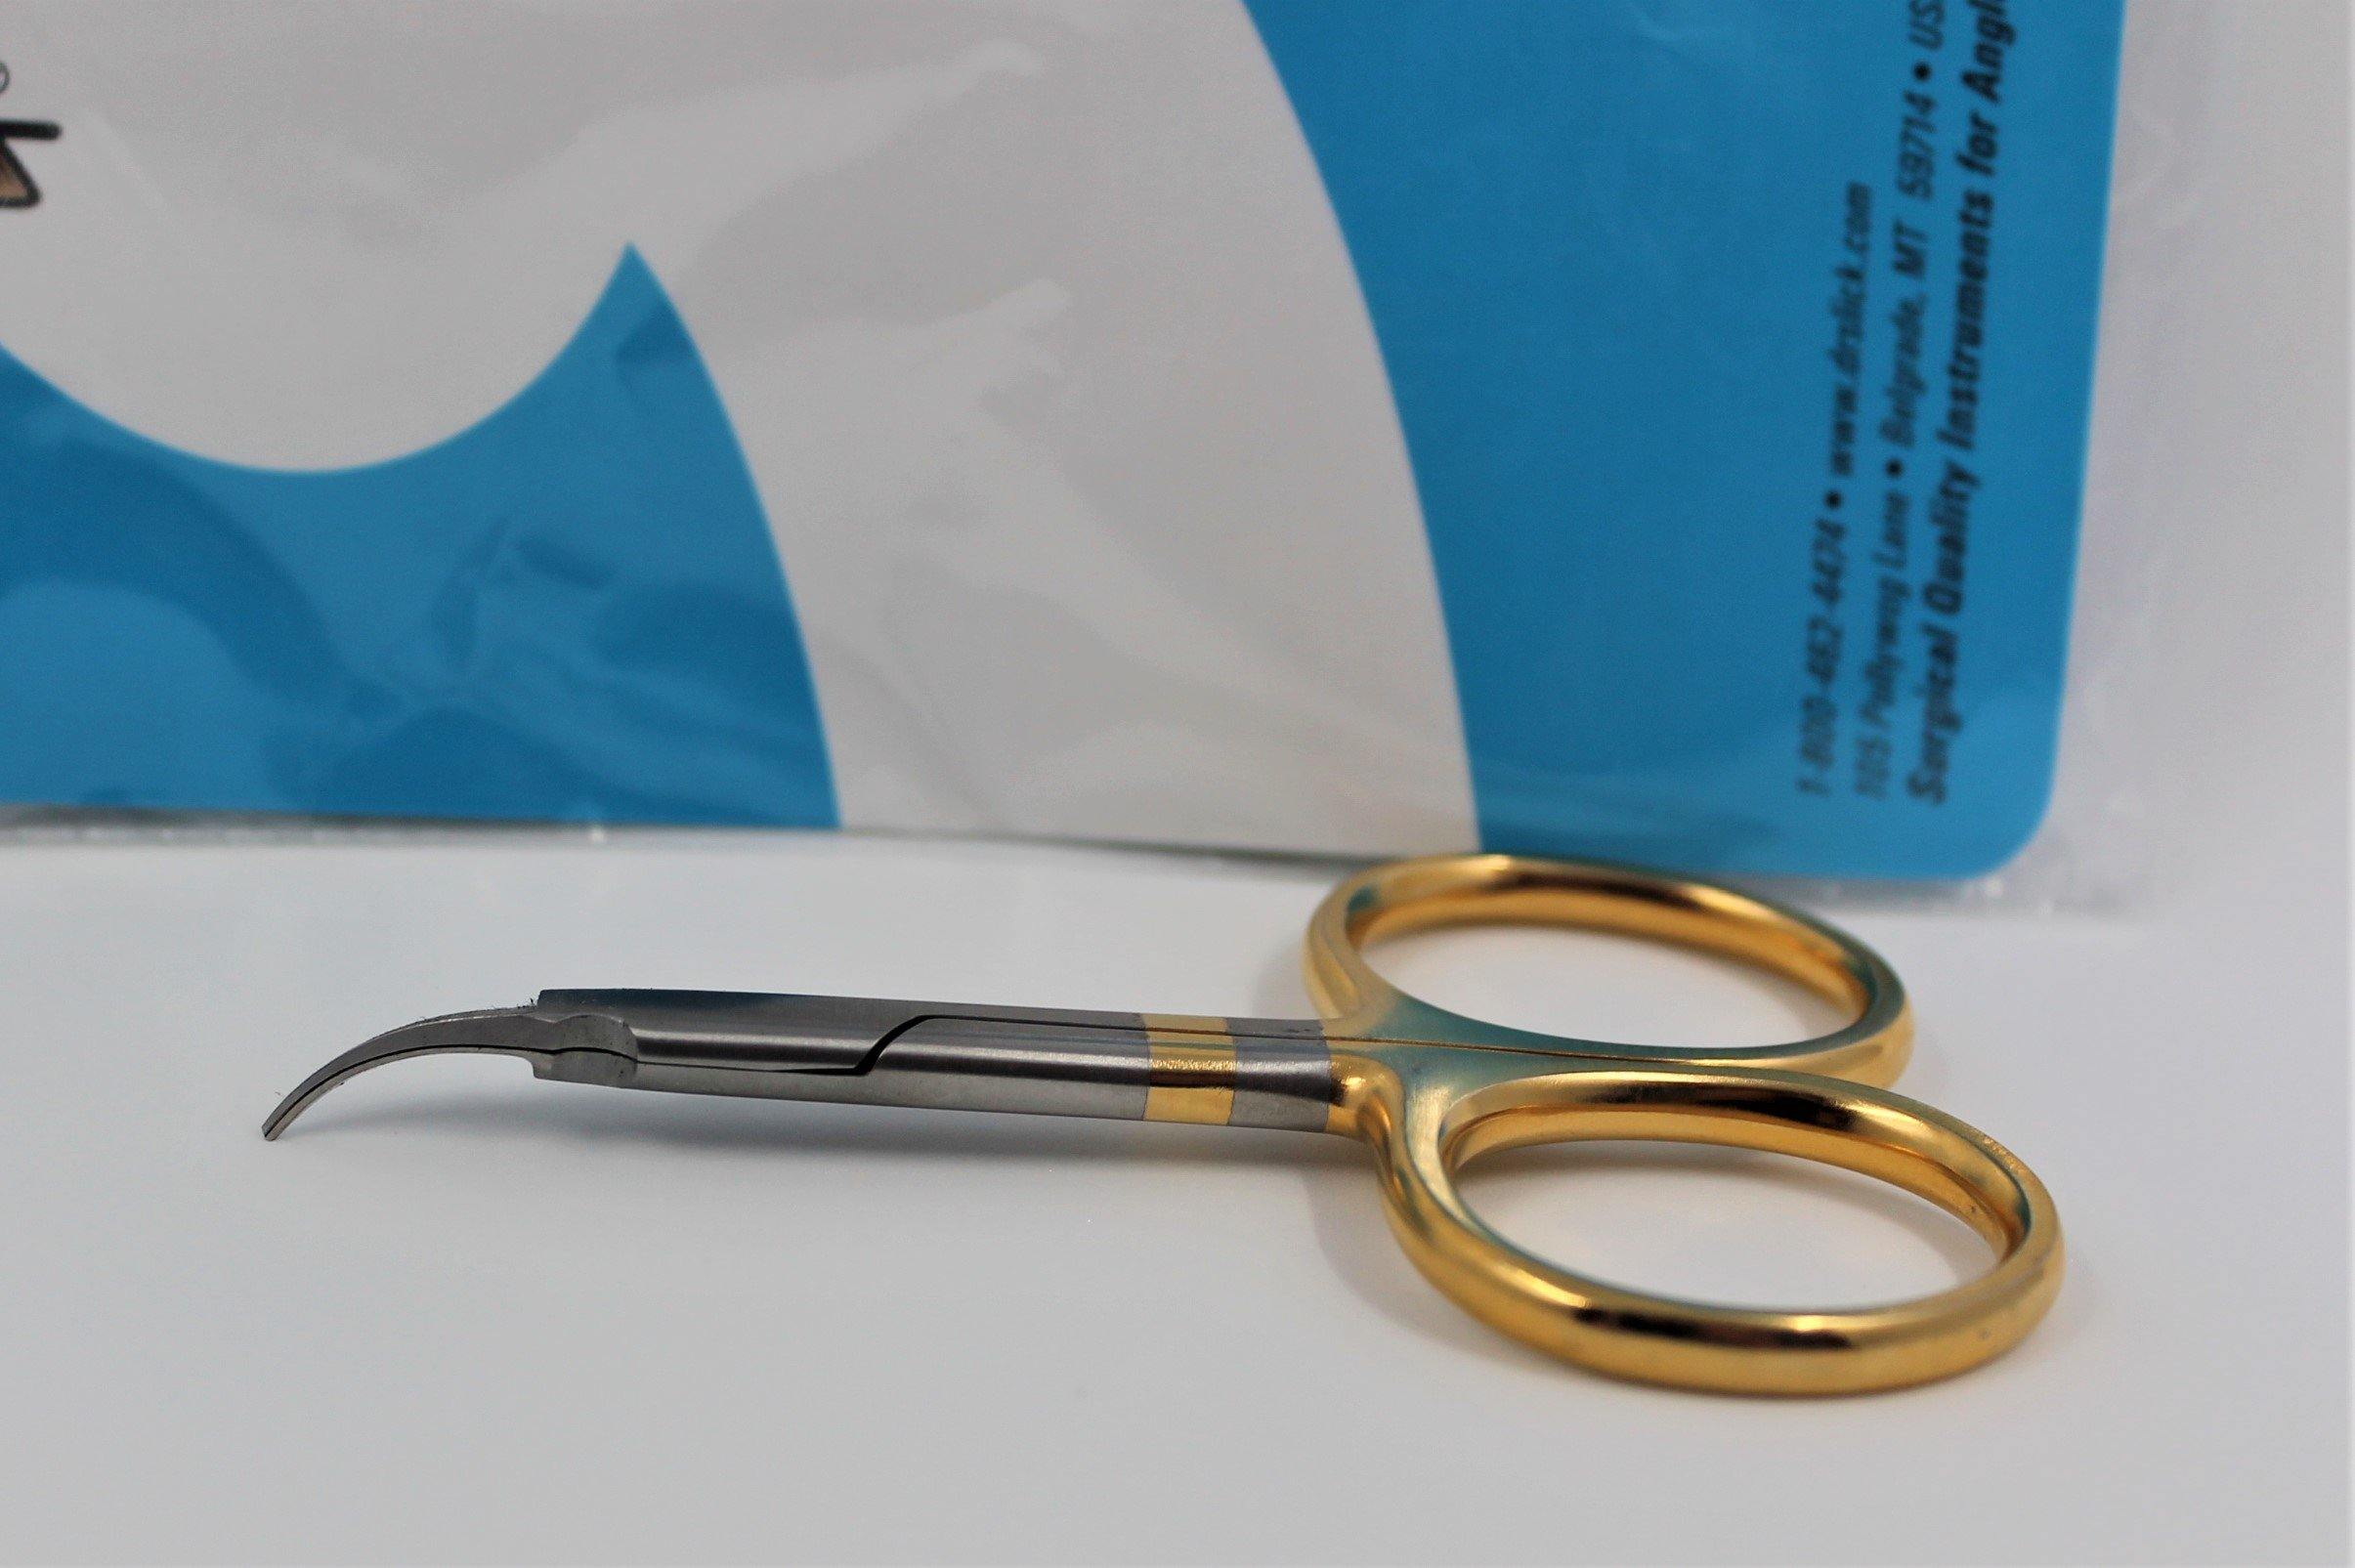 Dr. Slick 3.5 Curved Arrow Scissors